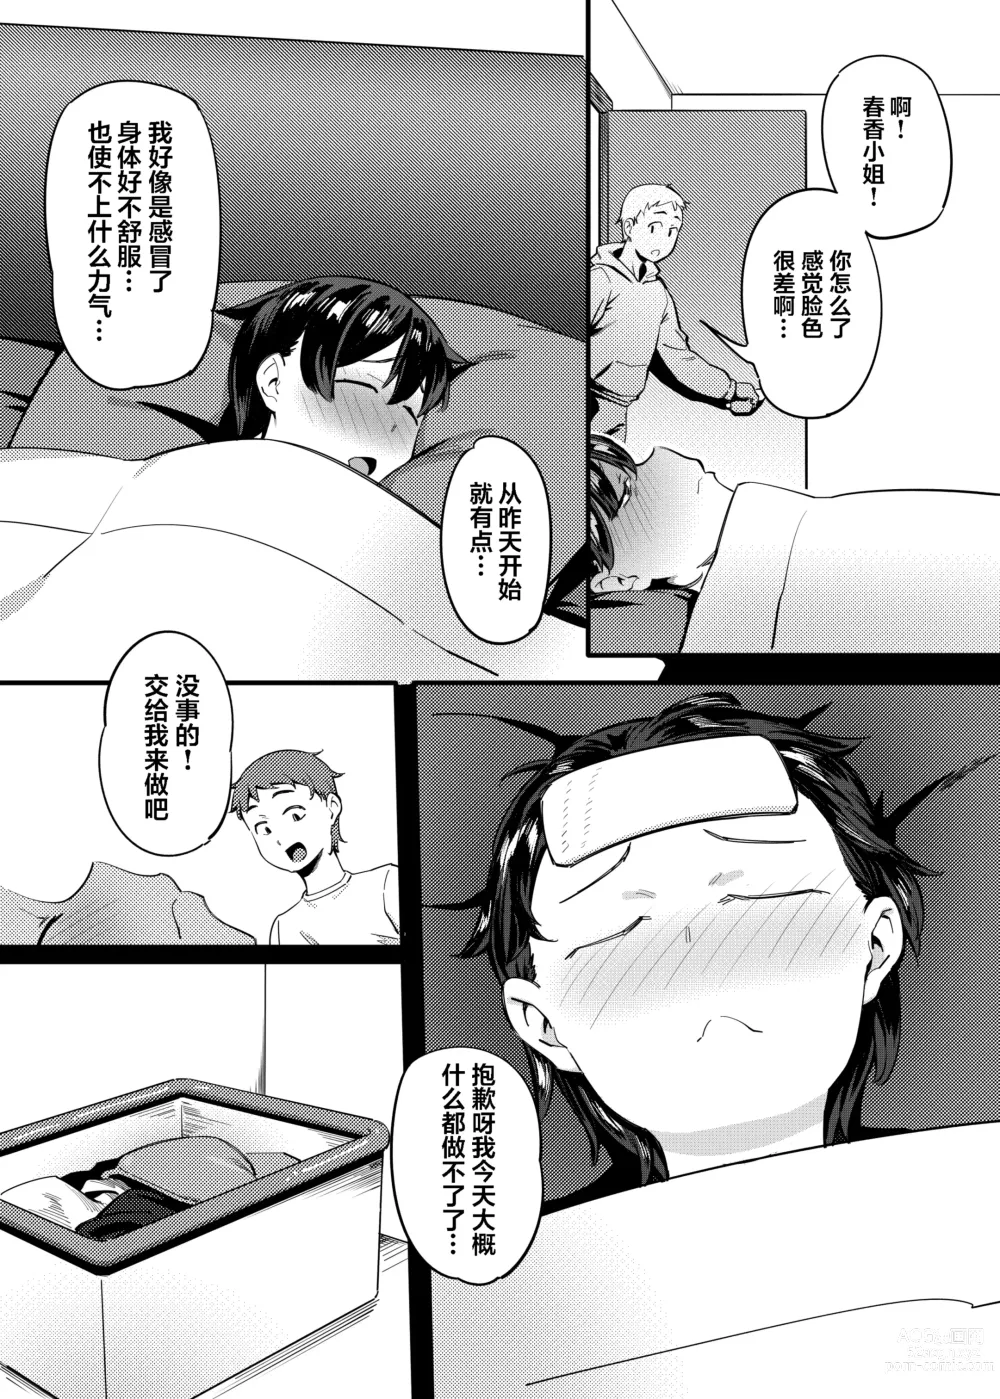 Page 7 of doujinshi 隔壁的春香小姐